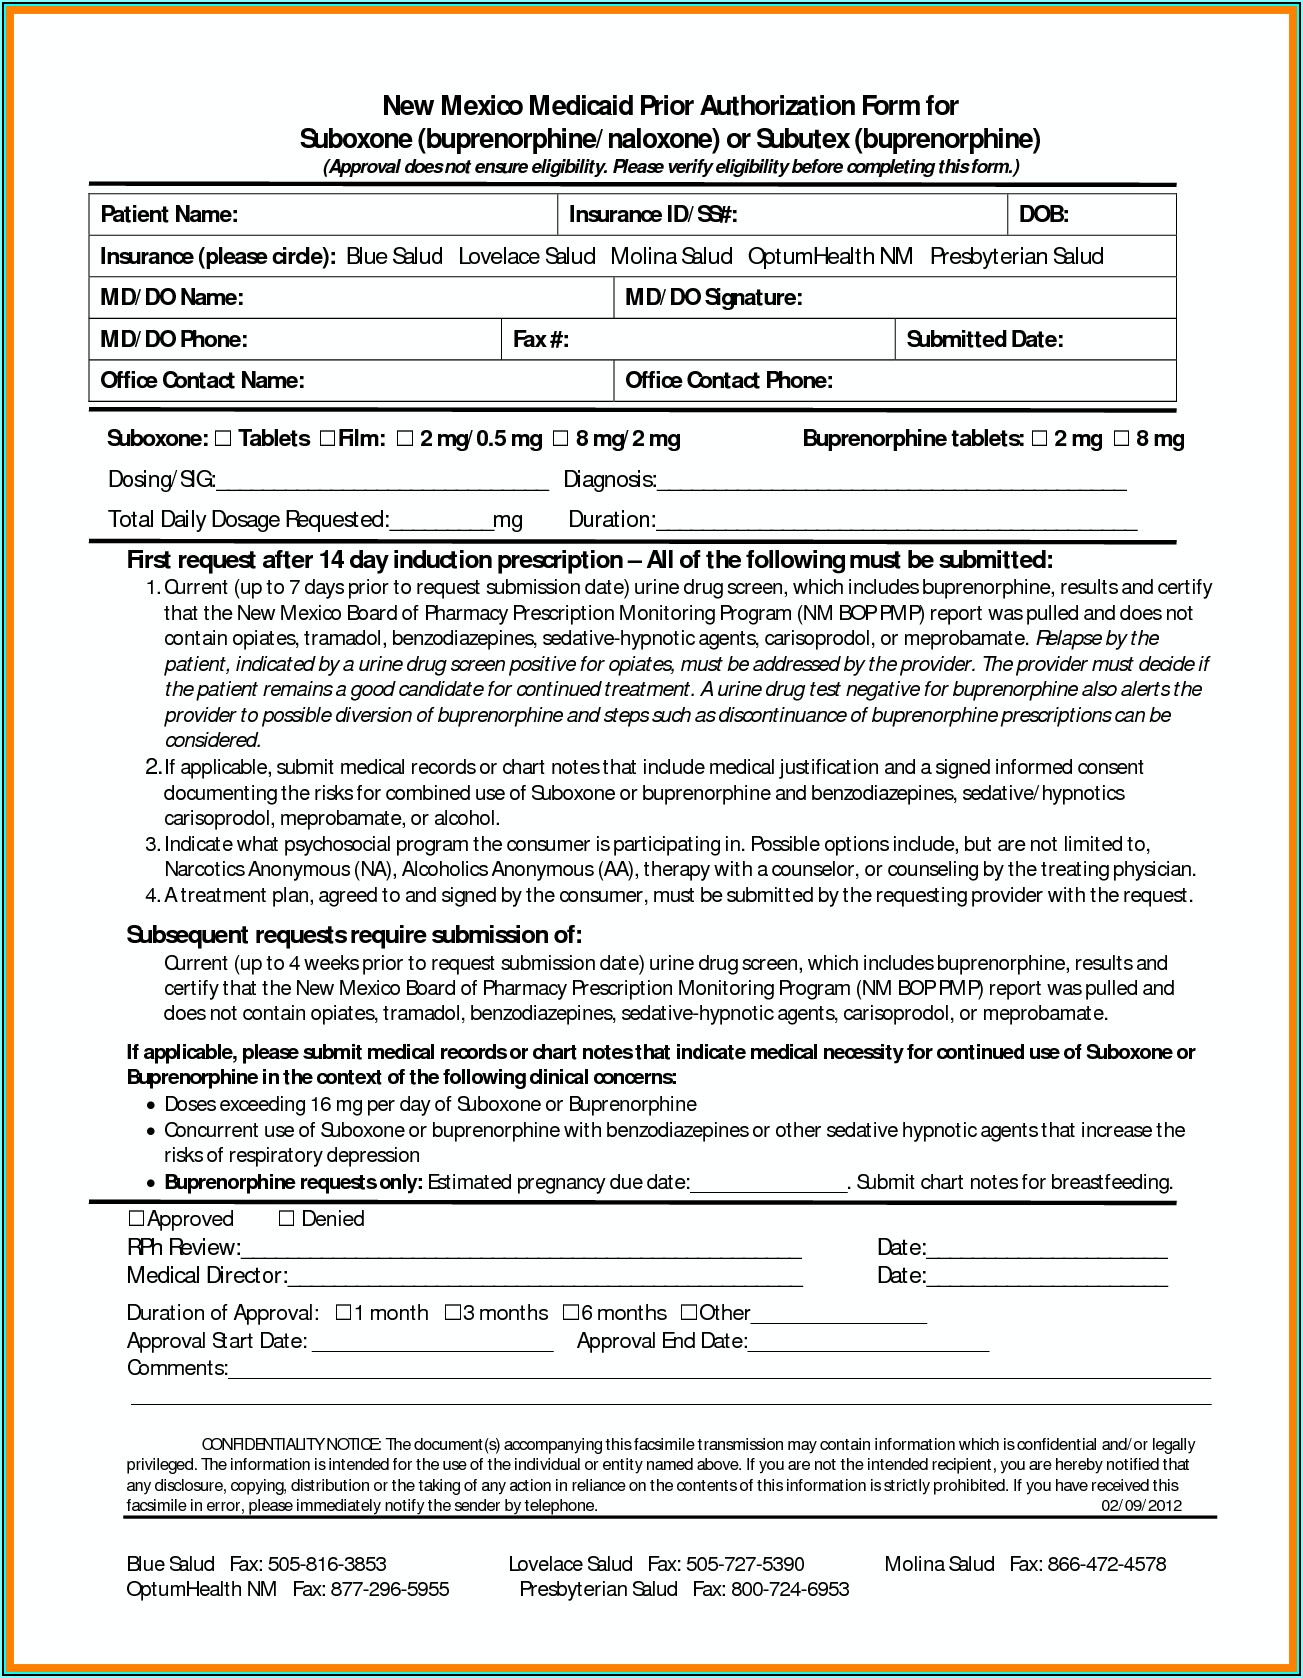 Medicare Form Sf 5510 Signature And Title Of Representative